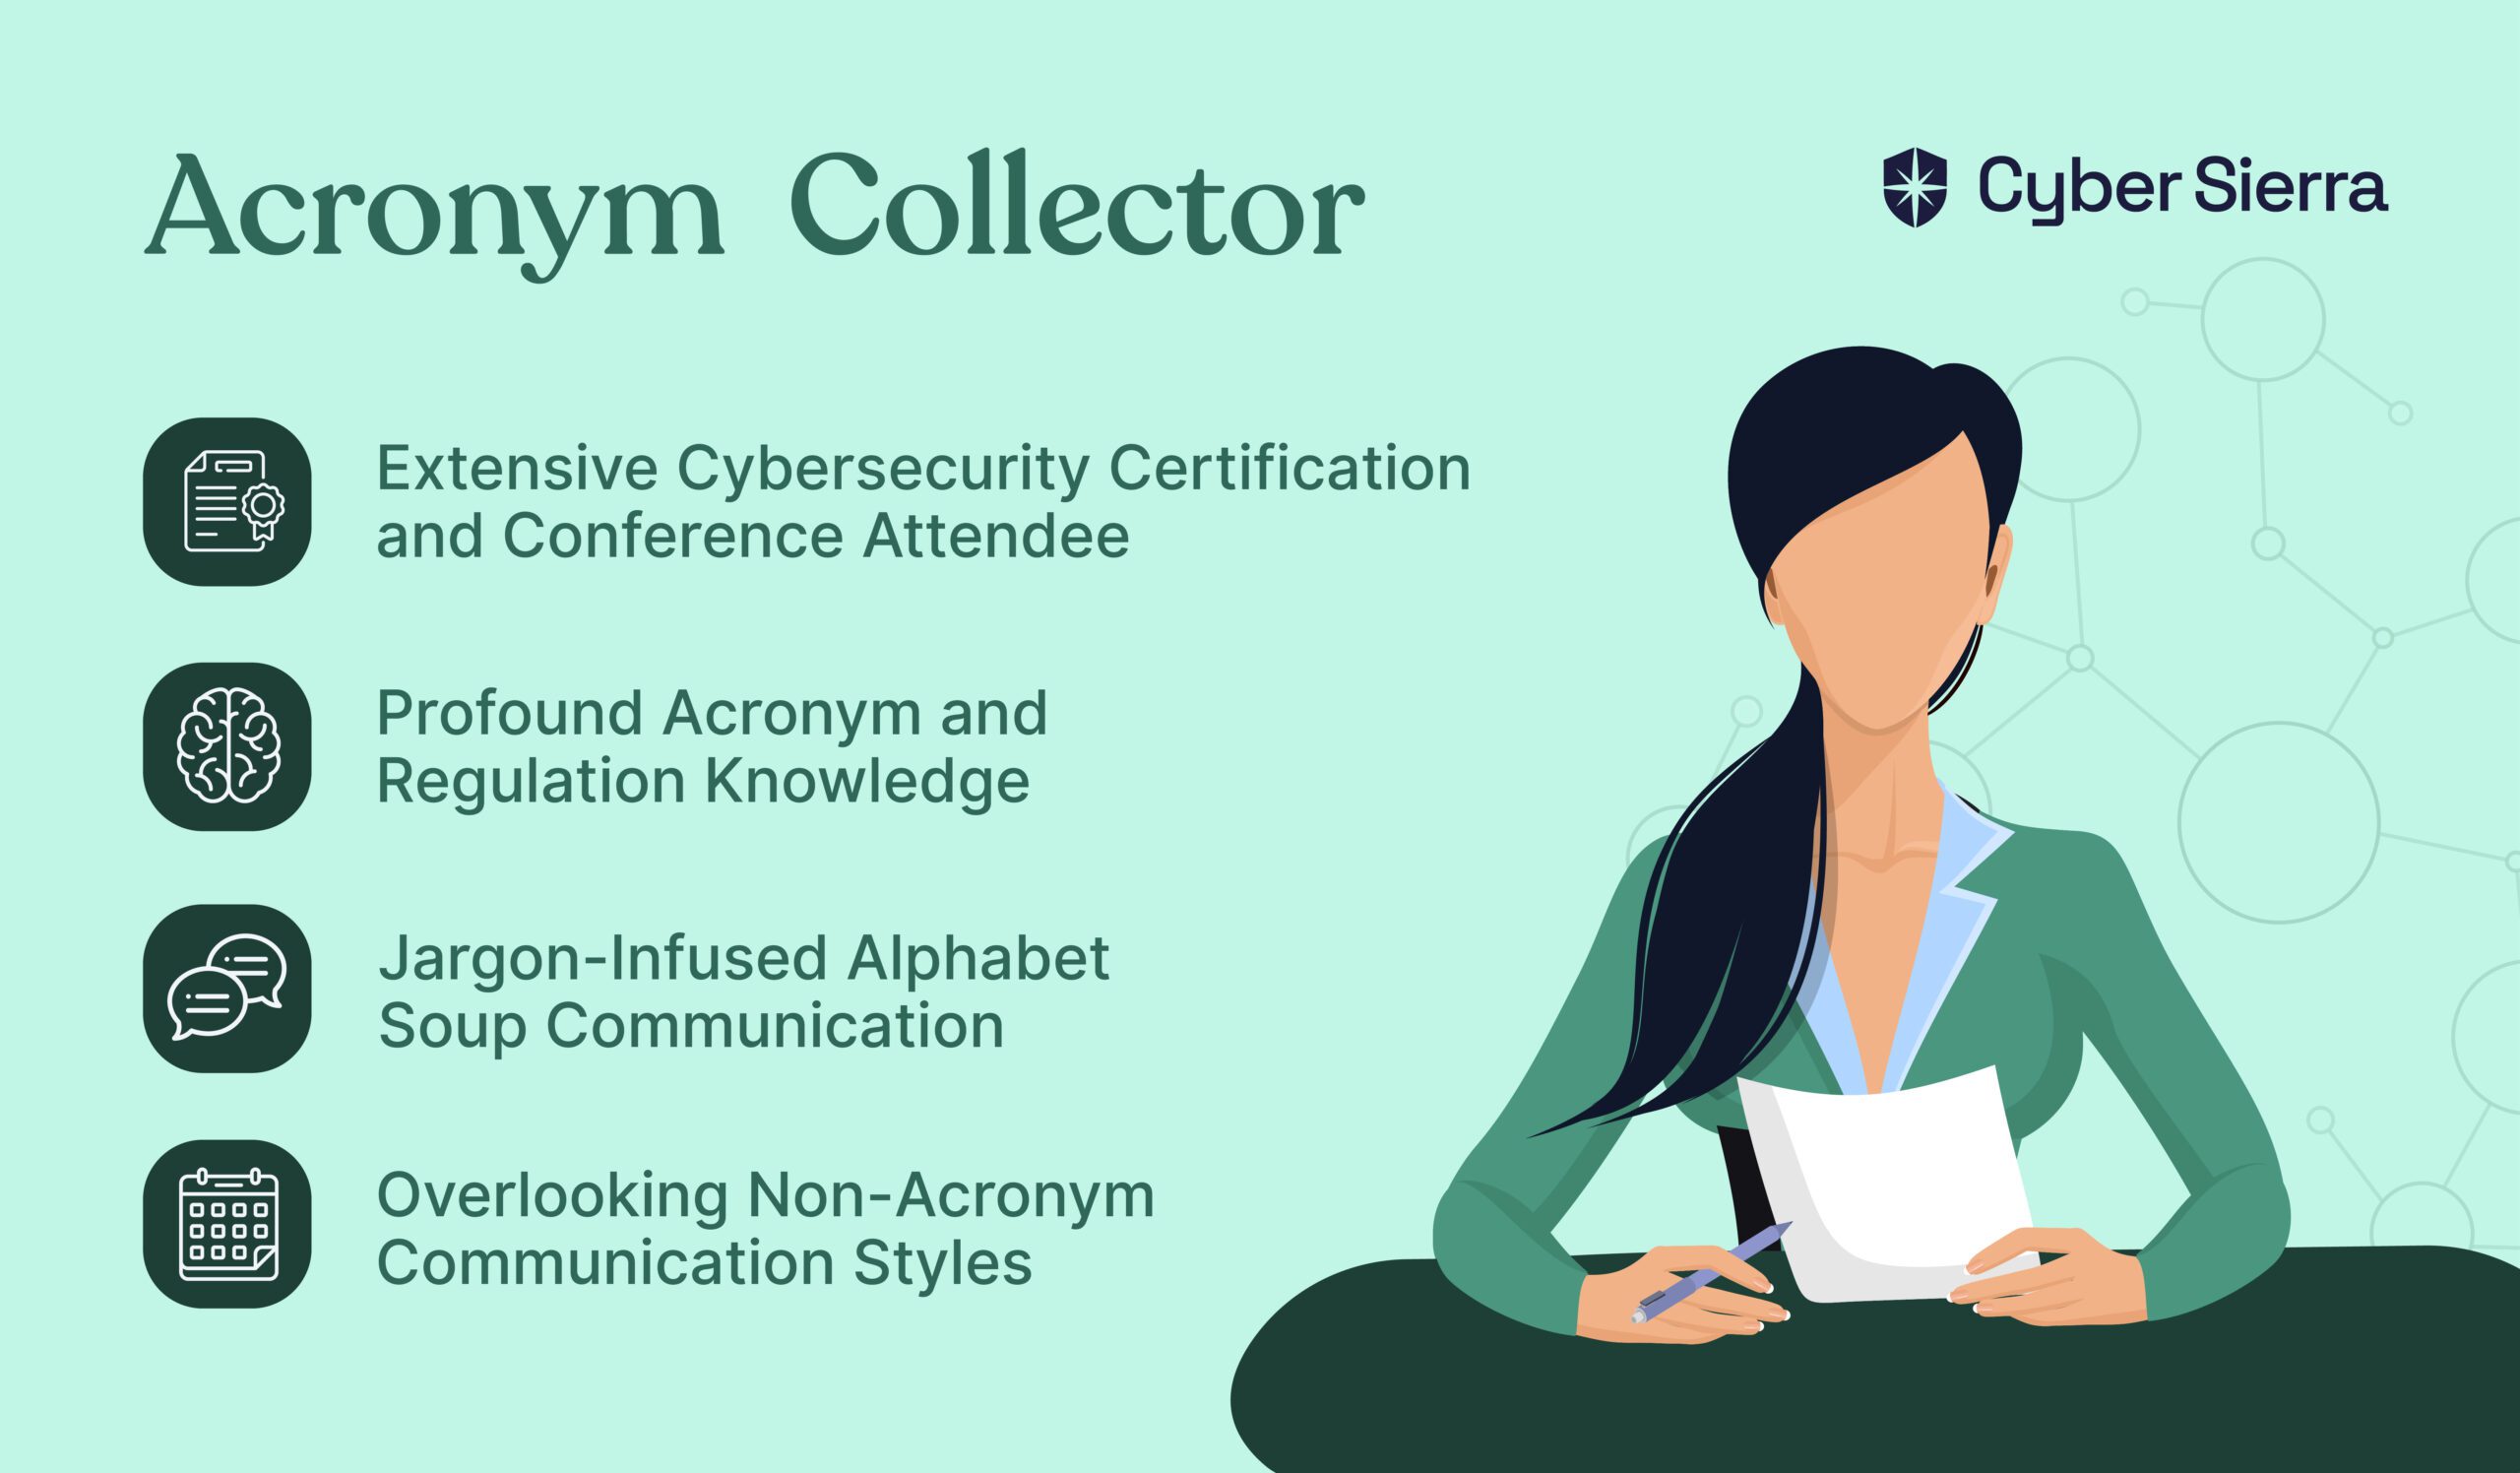 Acronym Collector